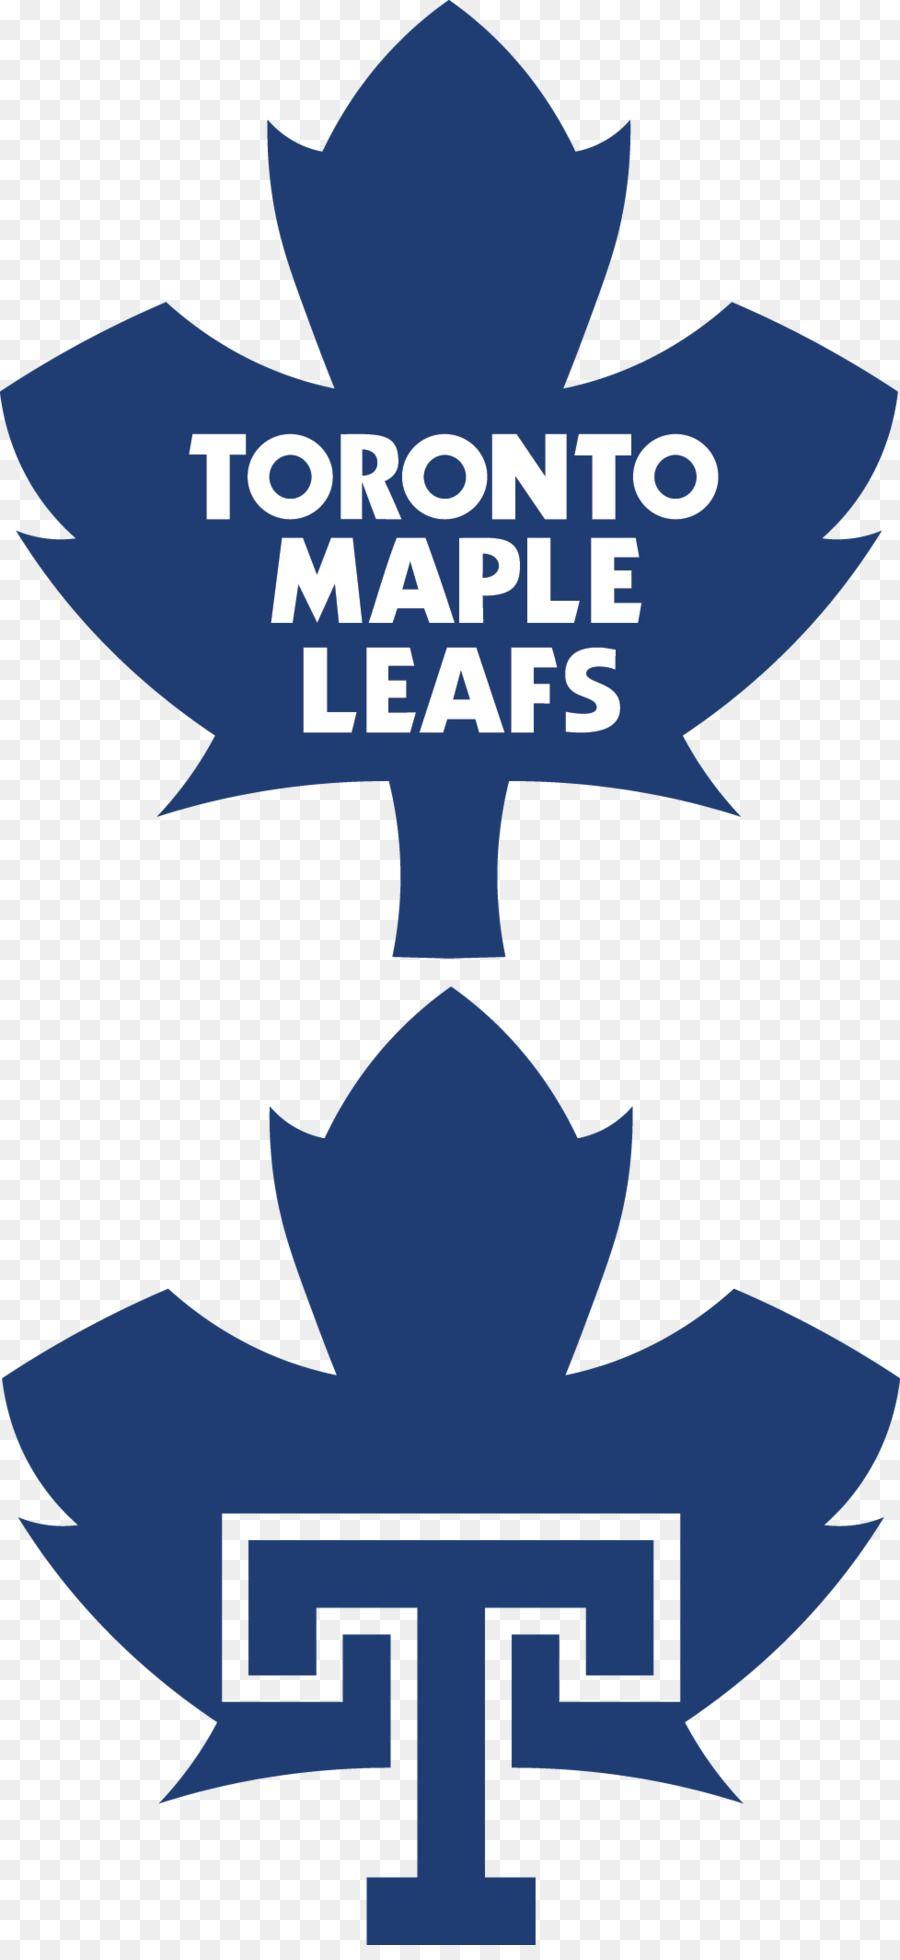 Red Maple Leaf Hockey Logo - Toronto Maple Leafs National Hockey League Scotiabank Arena St ...